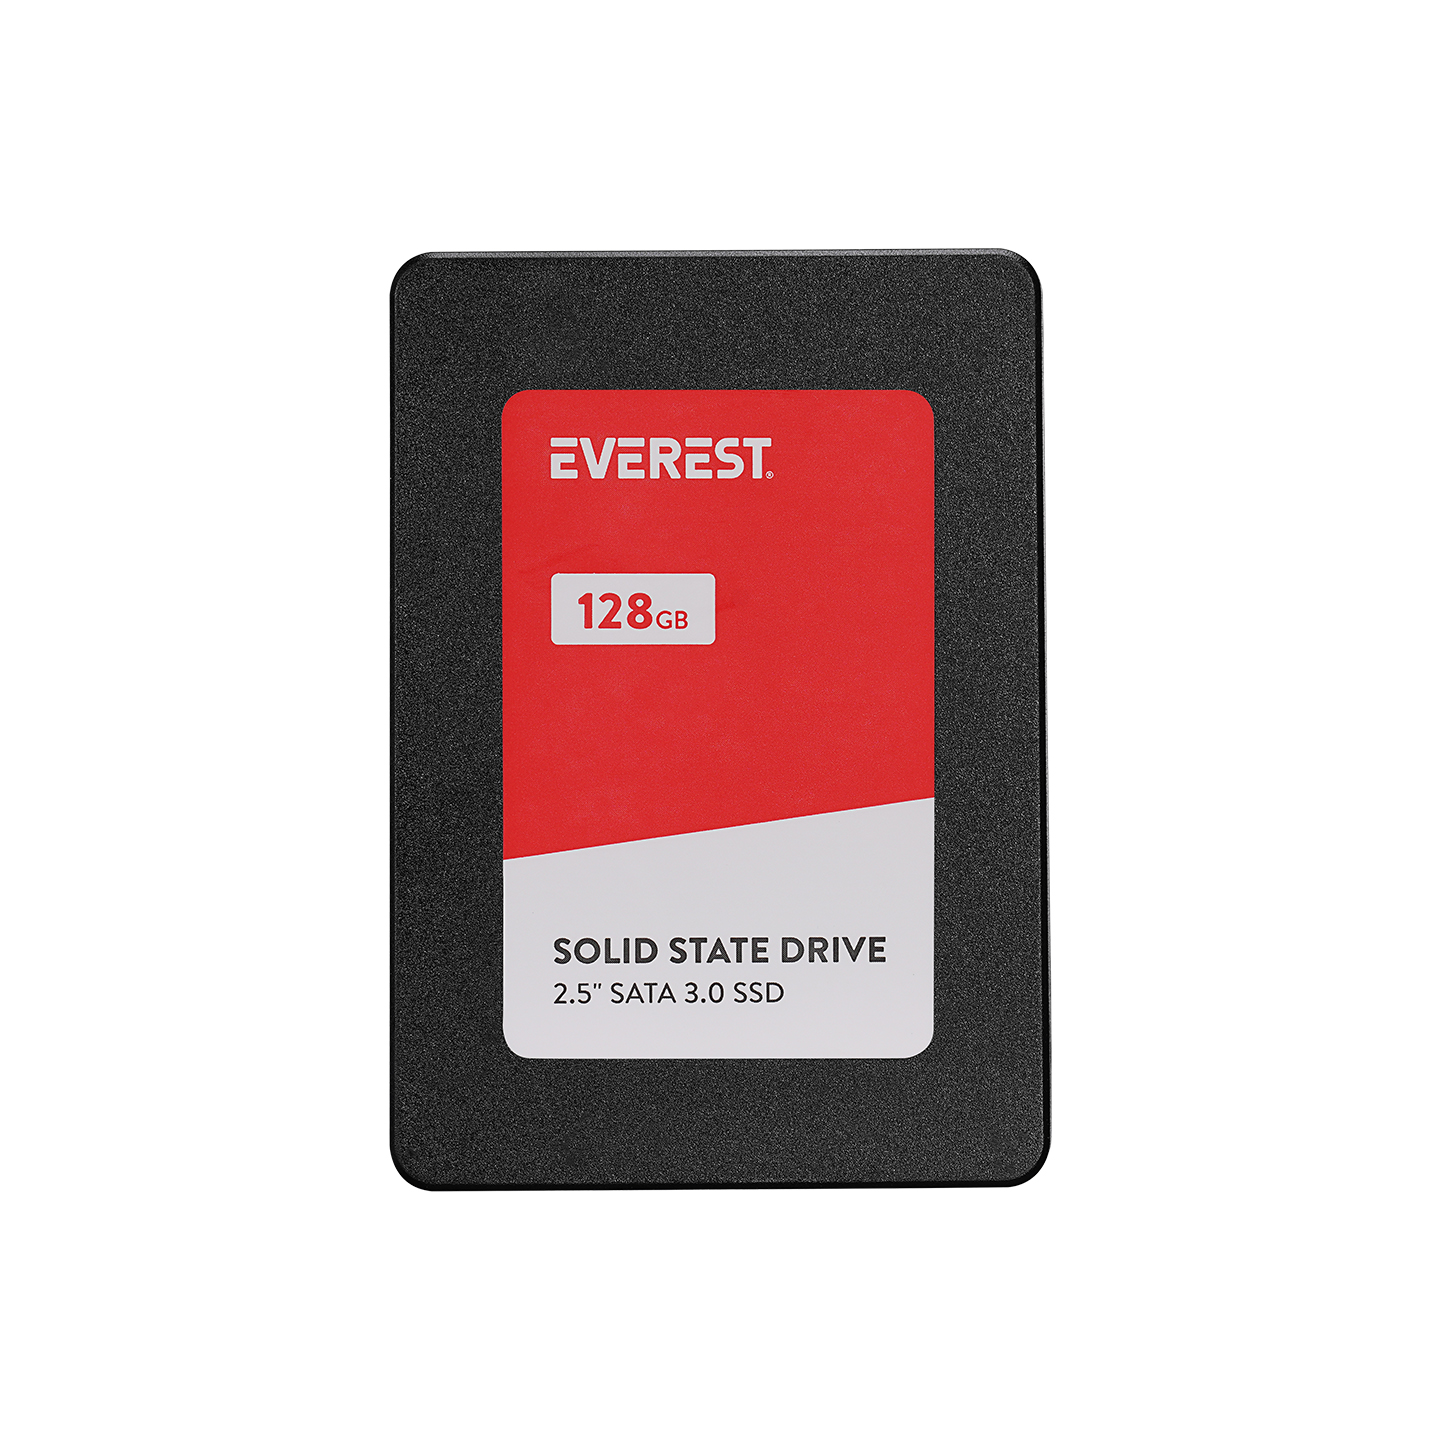 Everest ES128A 128GB 2.5 SATA3.0 520MB/460MB 3D NAND Flash SSD (Solid State Drive)